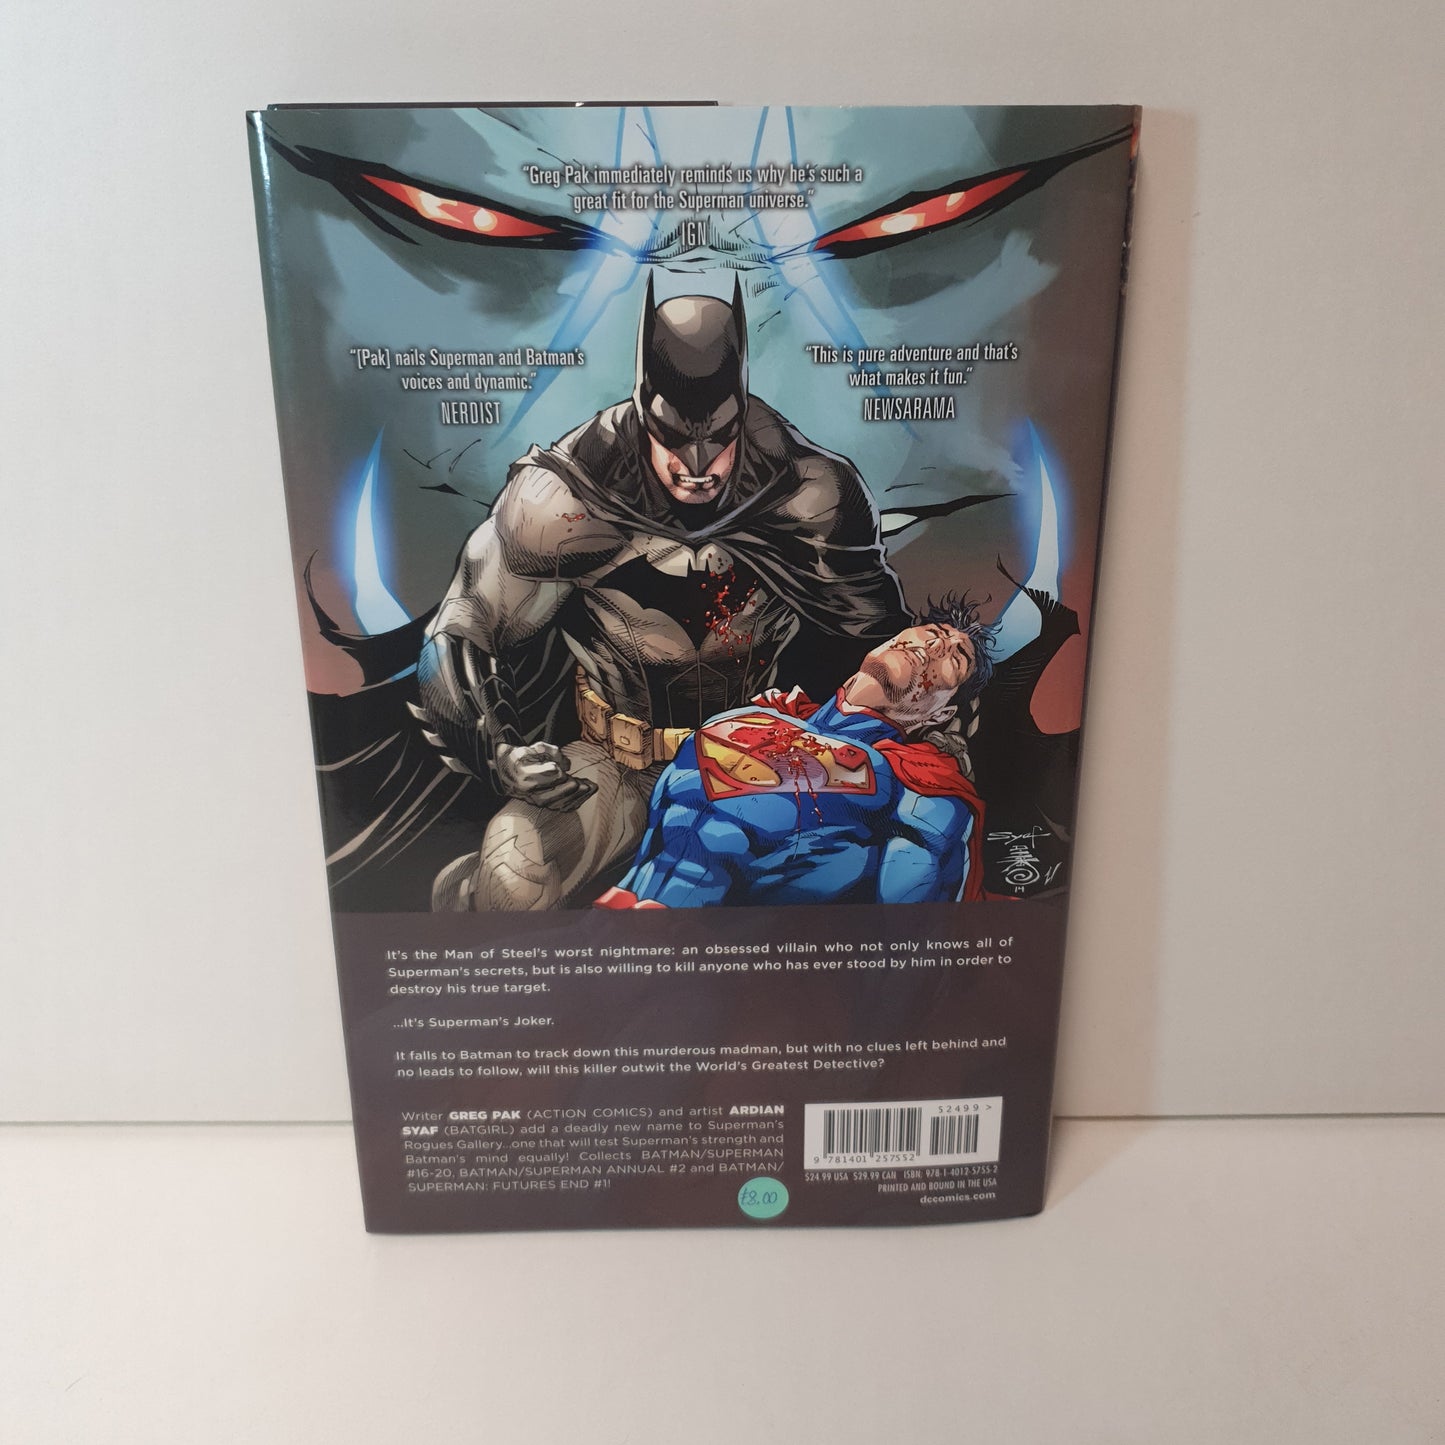 Batman/Superman vol 4 Siege by Pak & Syaf (2015)